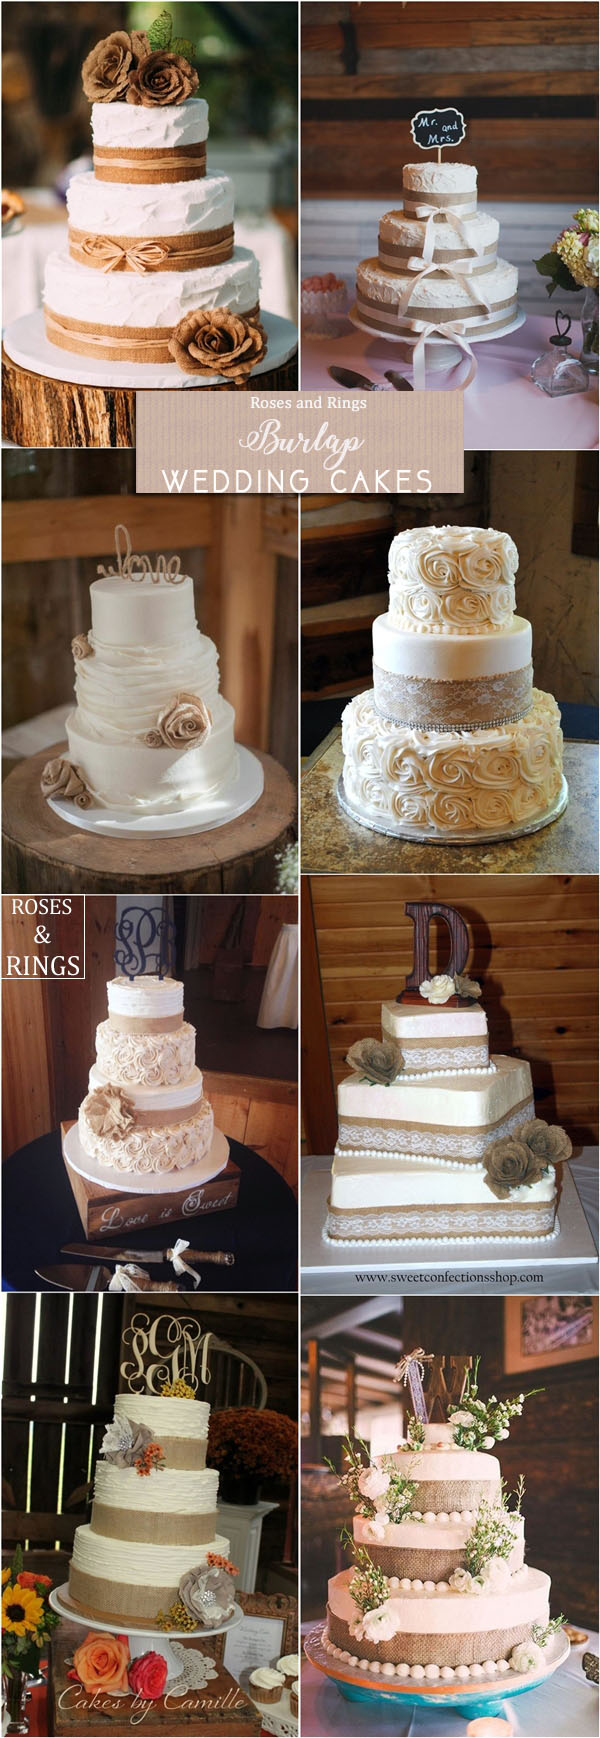 Rustic country burlap wedding cake ideas